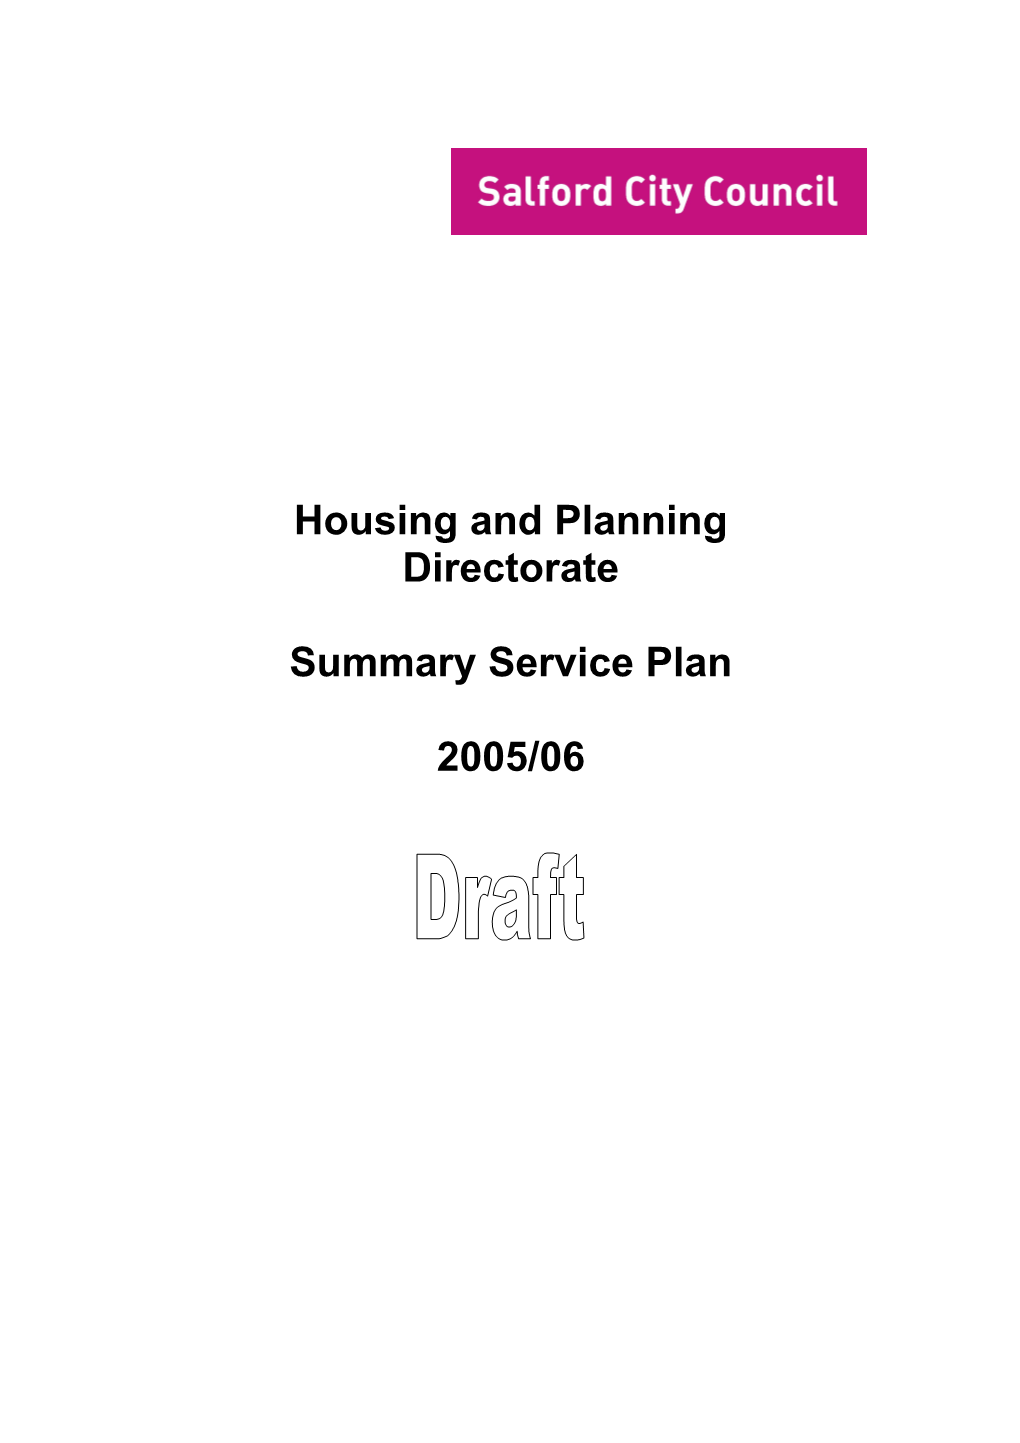 Development Services Service Plan 2004/05